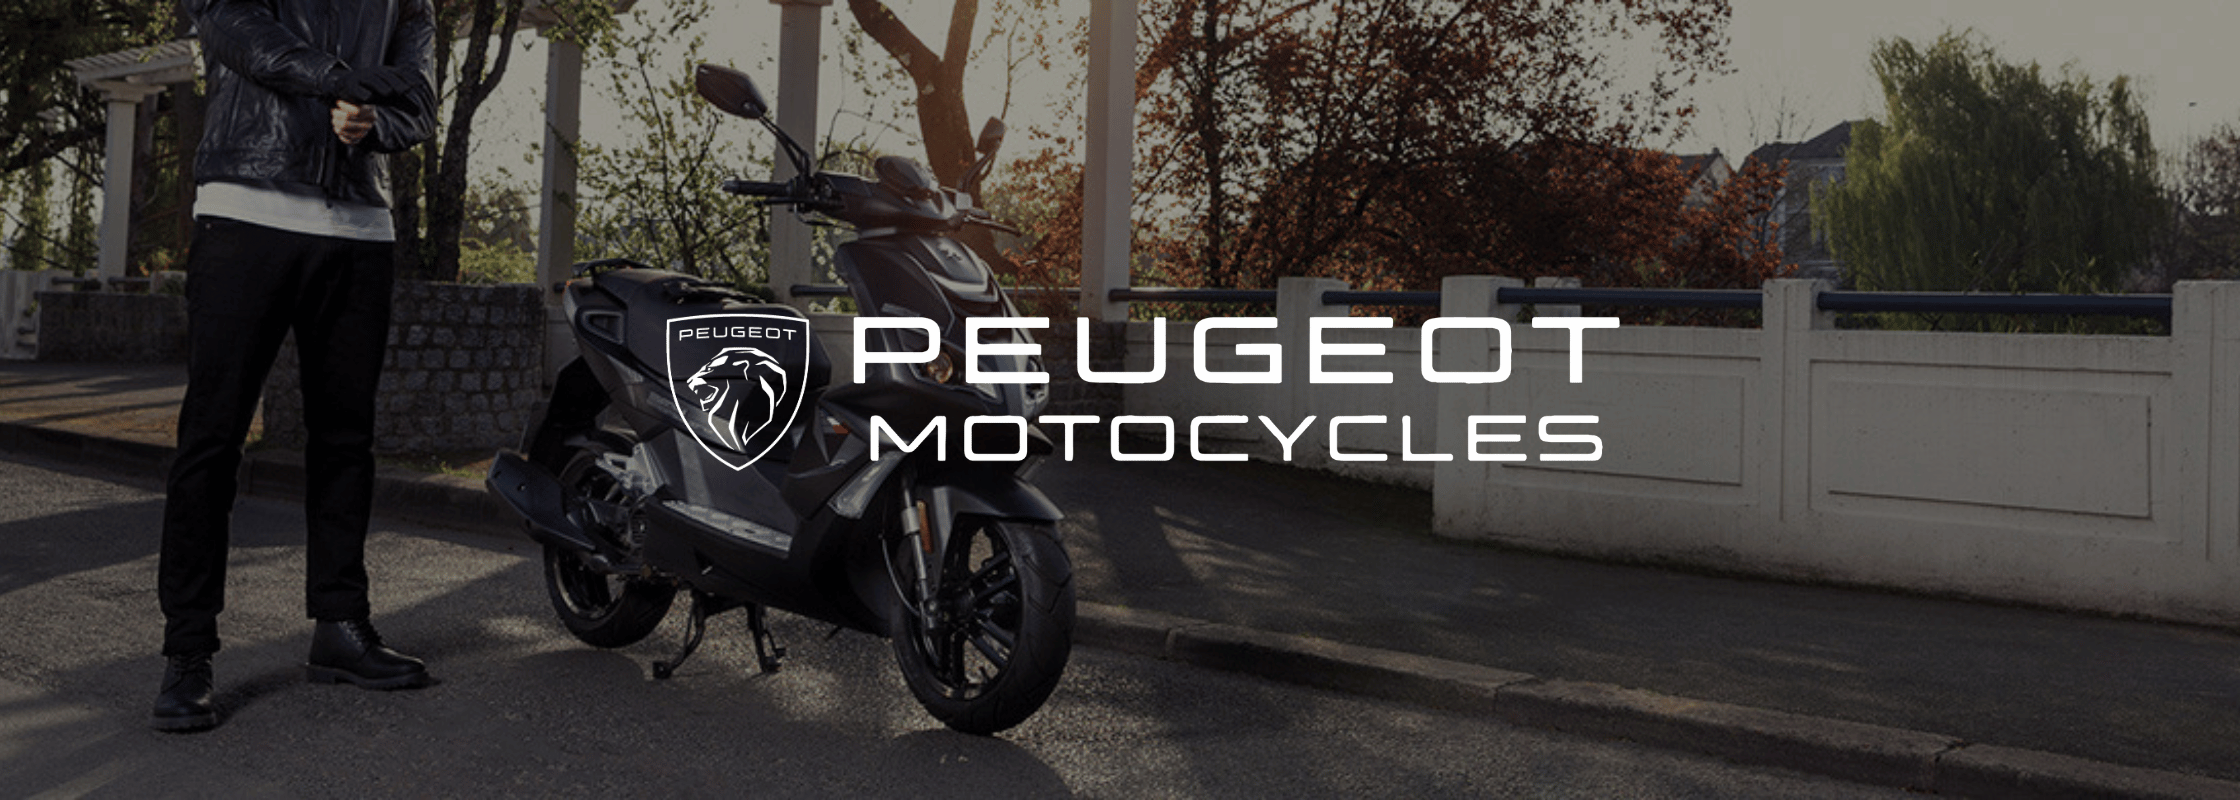 Peugeot Motorcycles 125cc